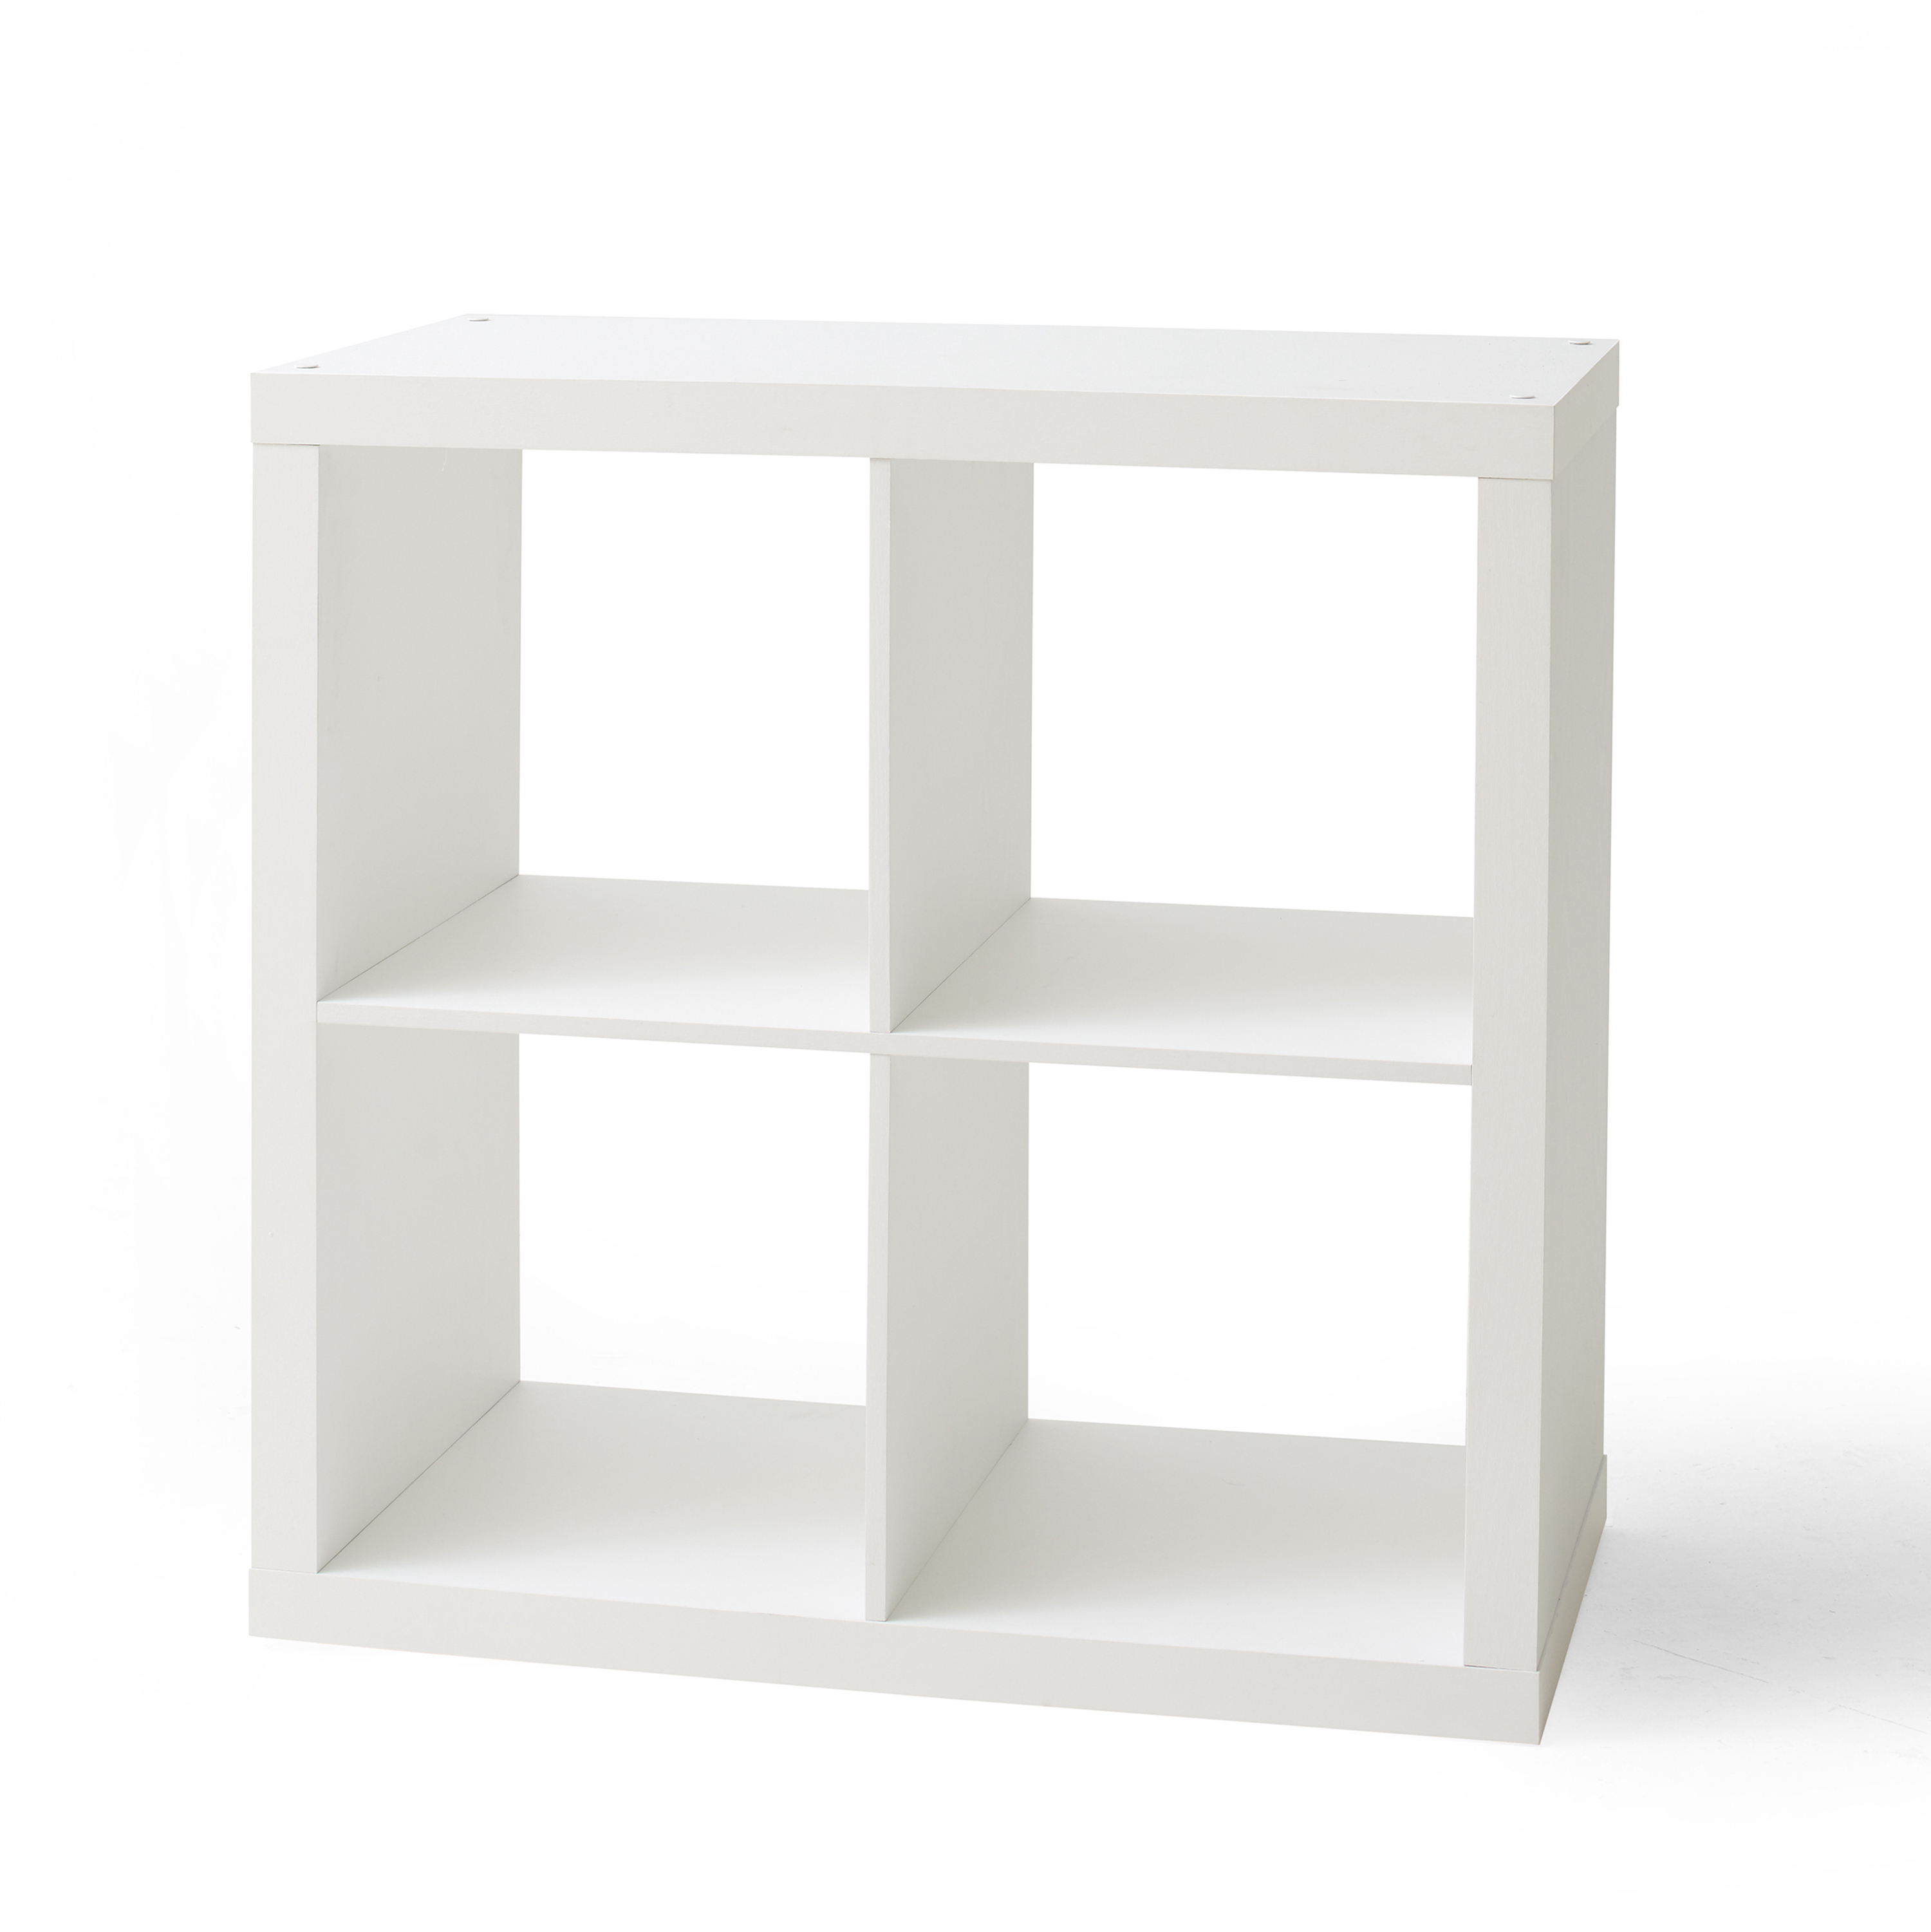 Better Homes & Gardens 4-Cube Storage Organizer, White Texture - image 3 of 7